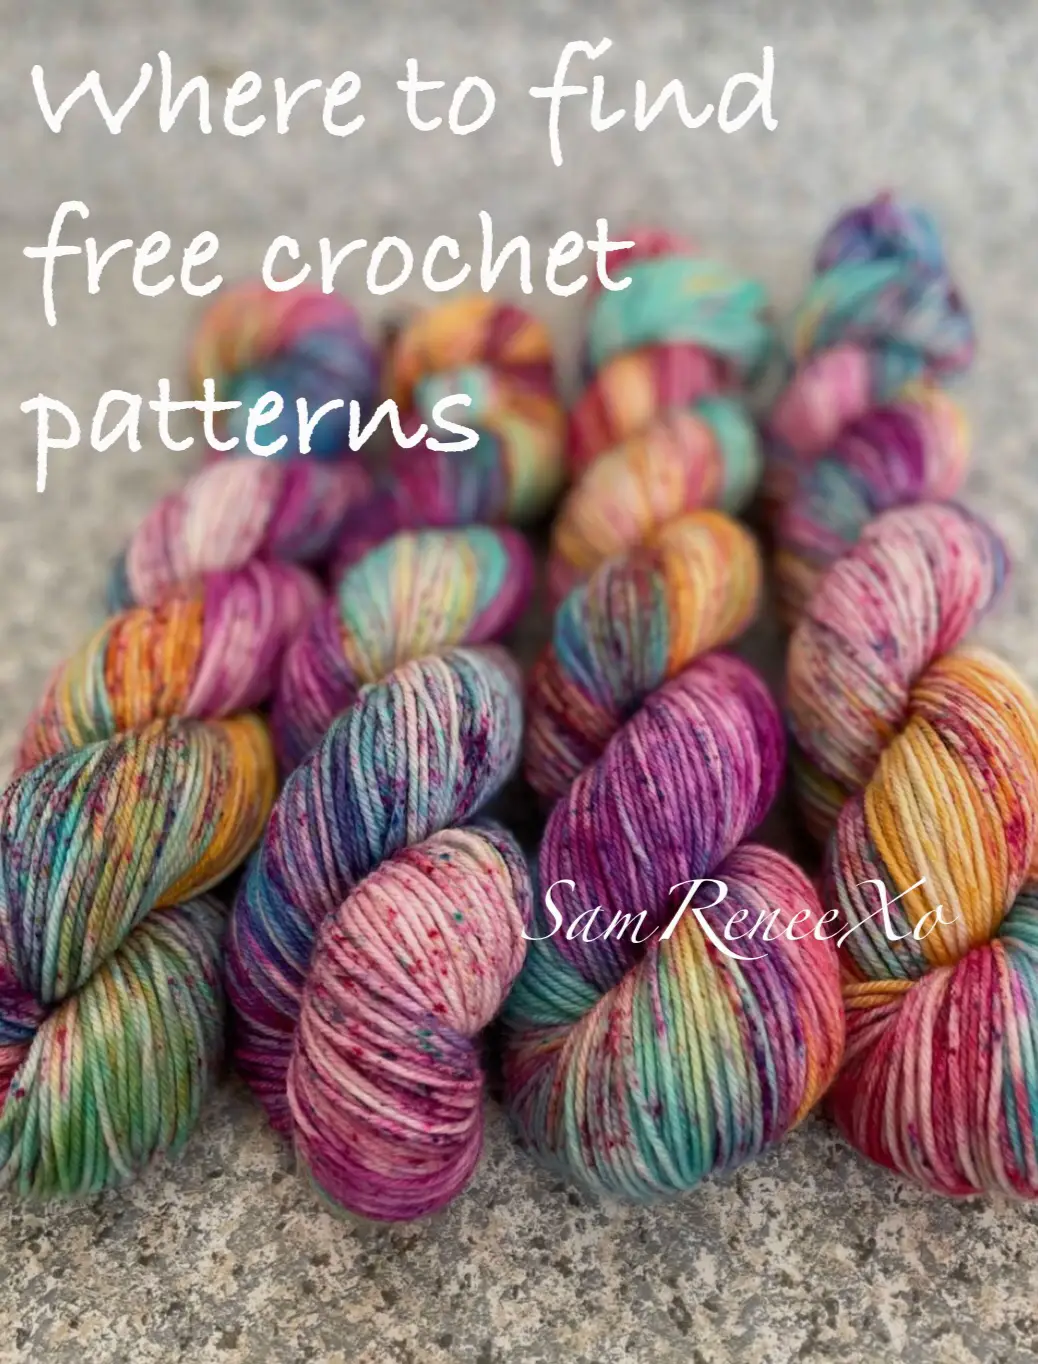 Free Crochet Patterns for Winter Accessories - Lemon8 Search